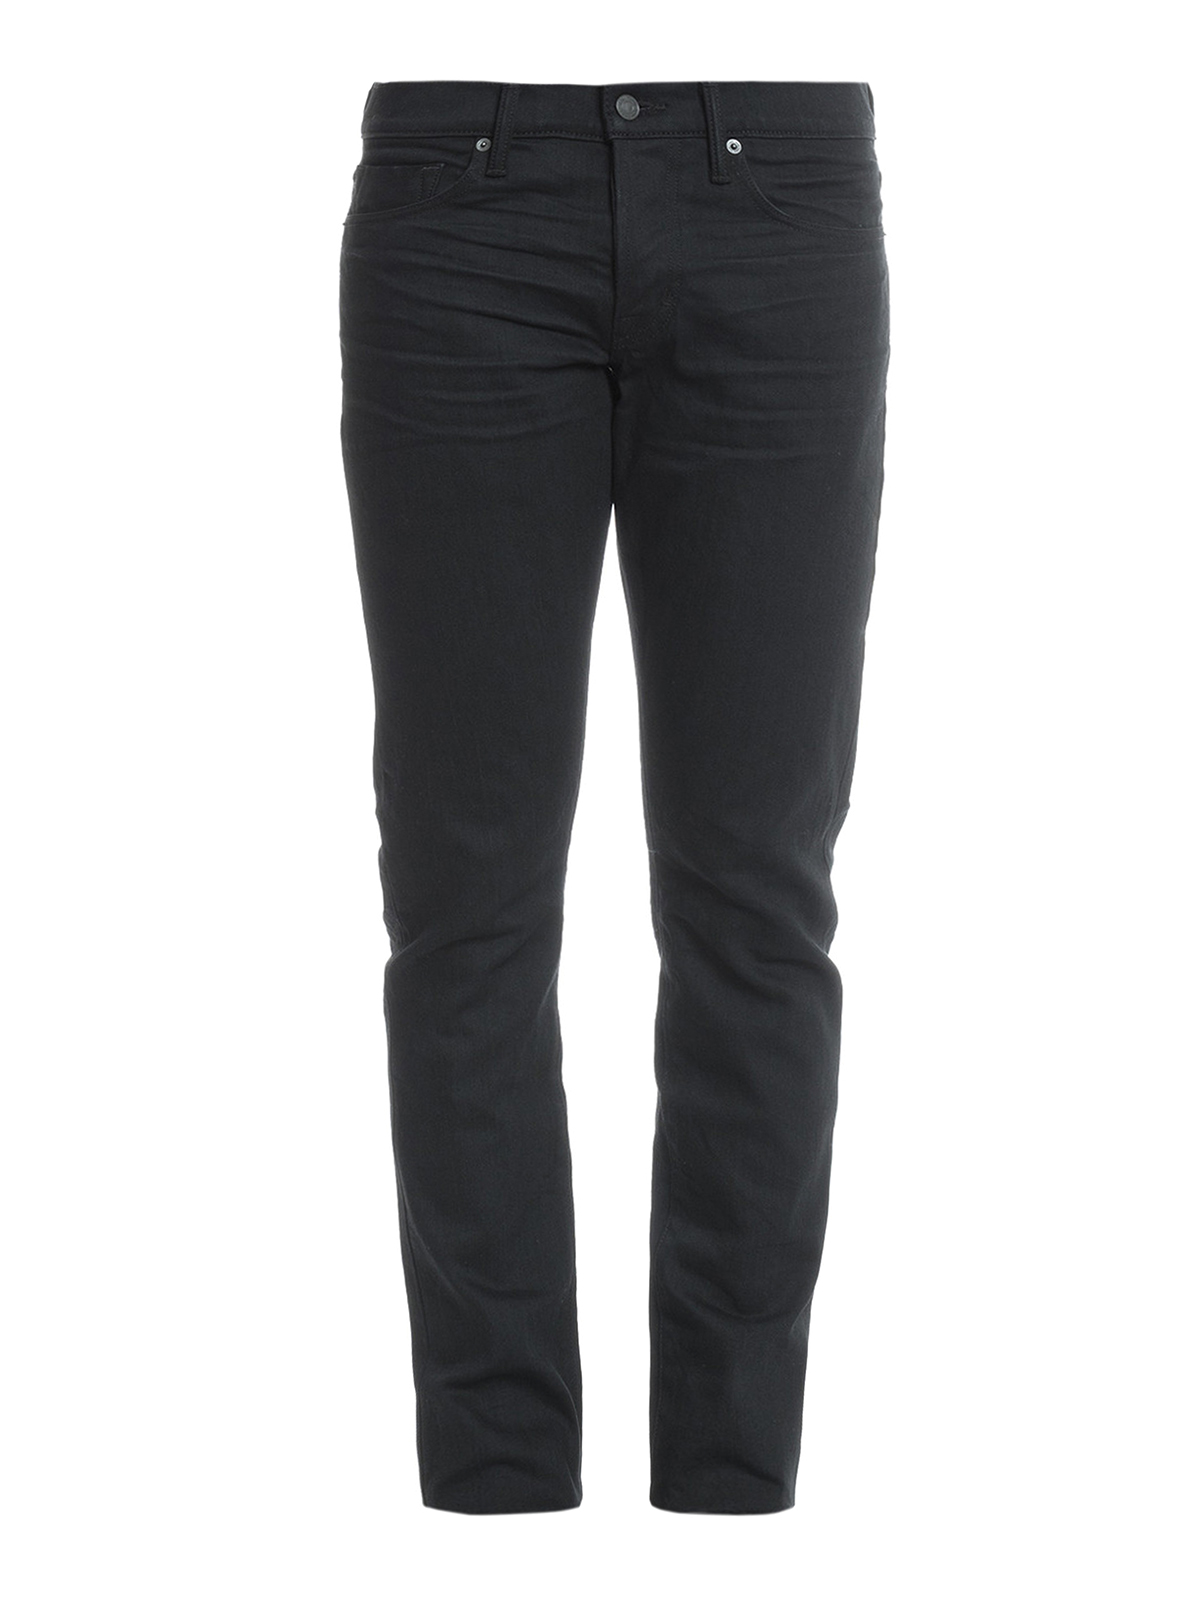 Straight leg jeans Tom Ford - Denim slim fit jeans - BMJ05TFD001K09